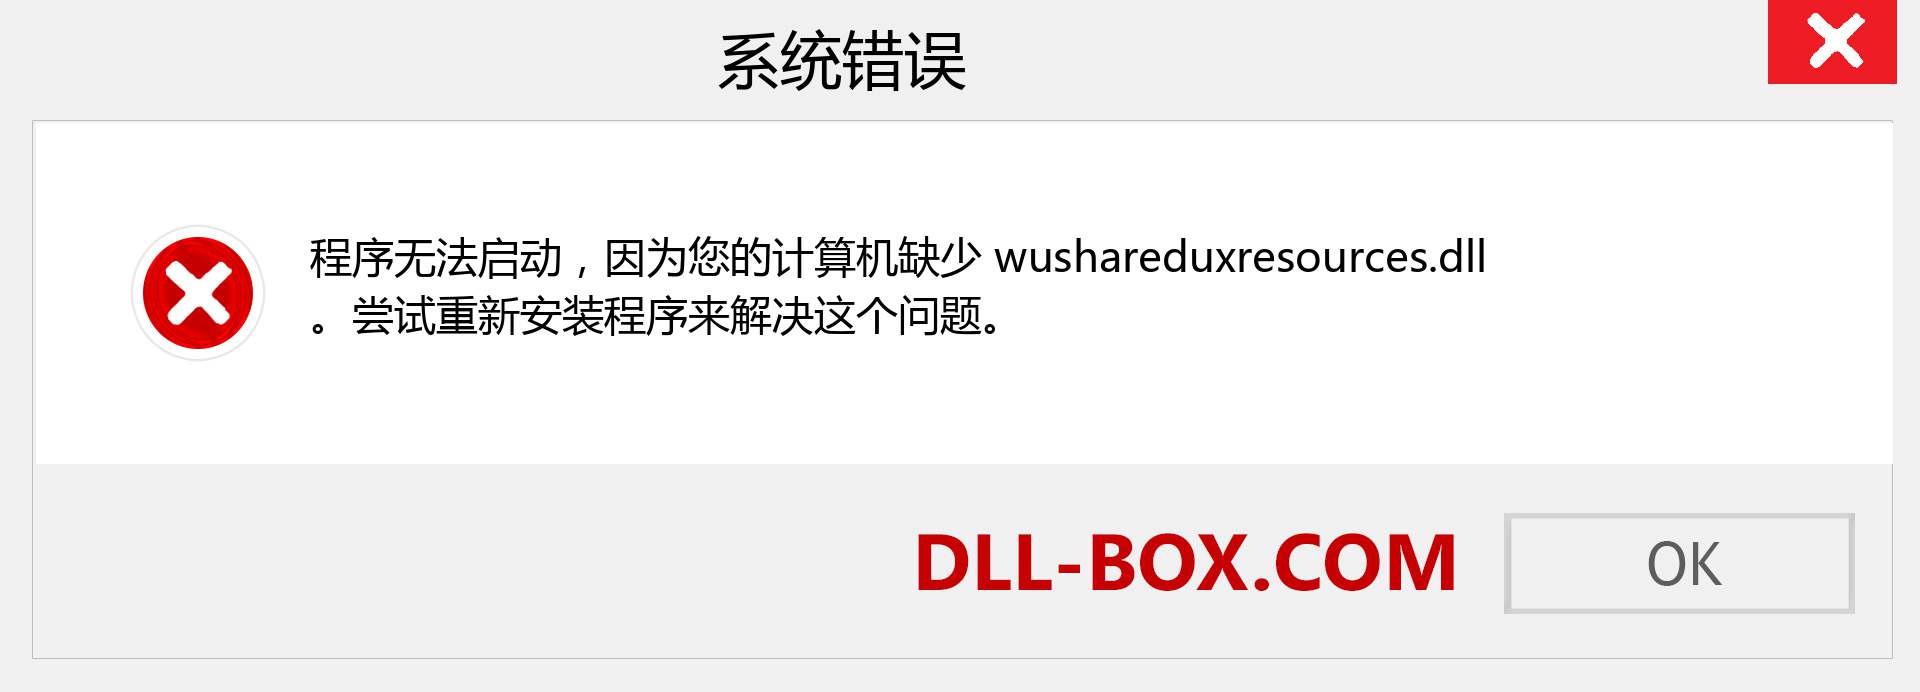 wushareduxresources.dll 文件丢失？。 适用于 Windows 7、8、10 的下载 - 修复 Windows、照片、图像上的 wushareduxresources dll 丢失错误